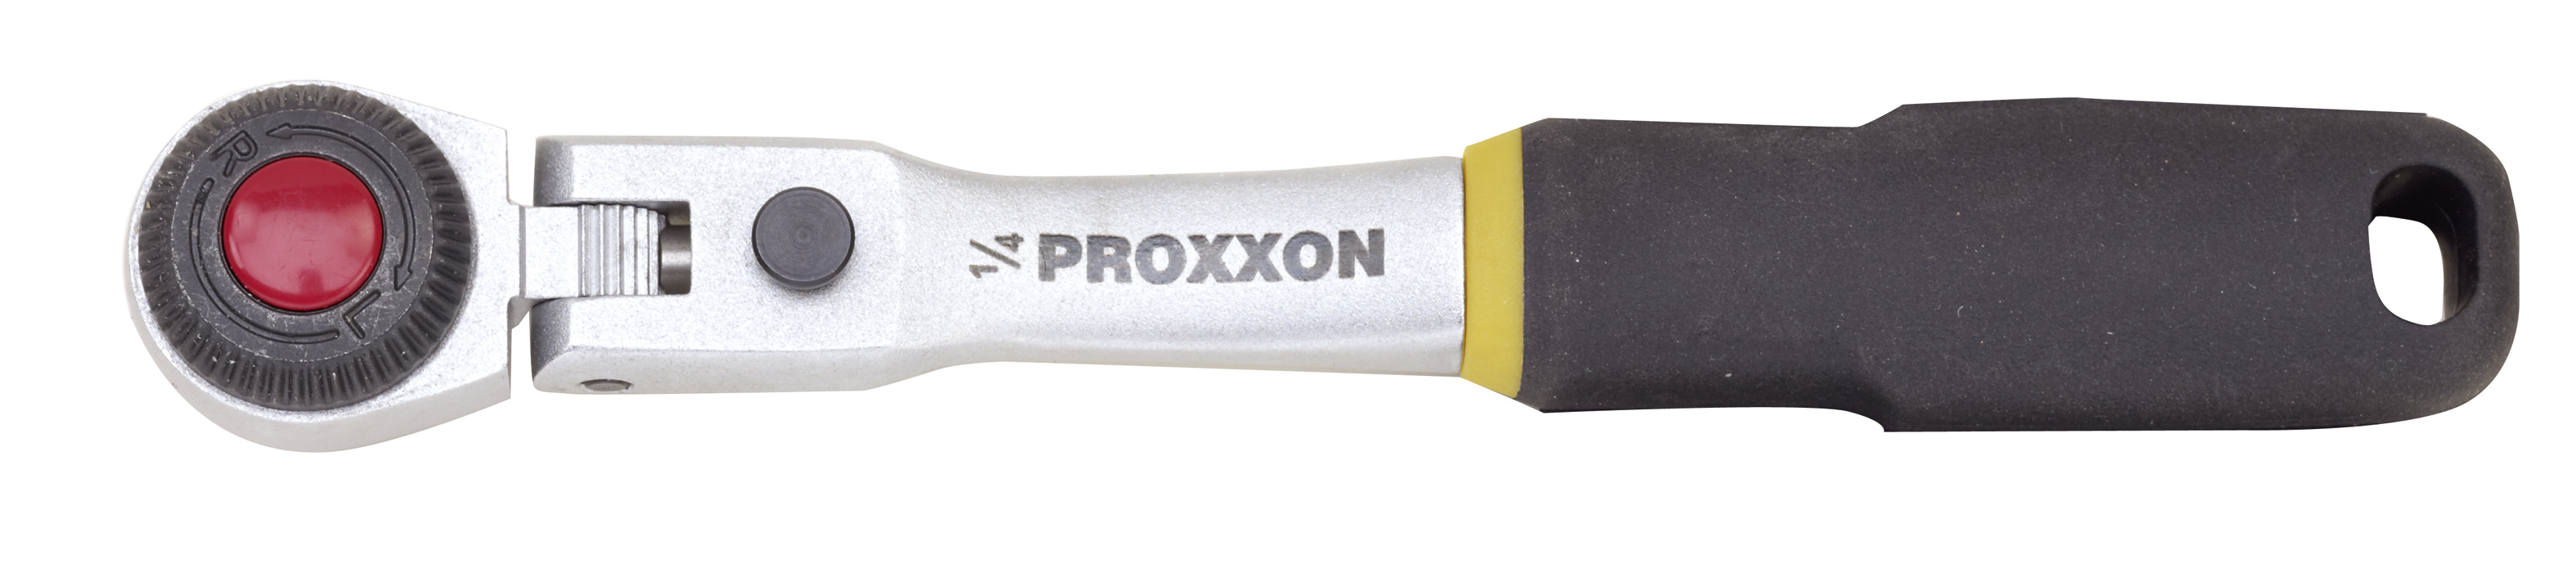 Omskiftelig skralde, PROXXON